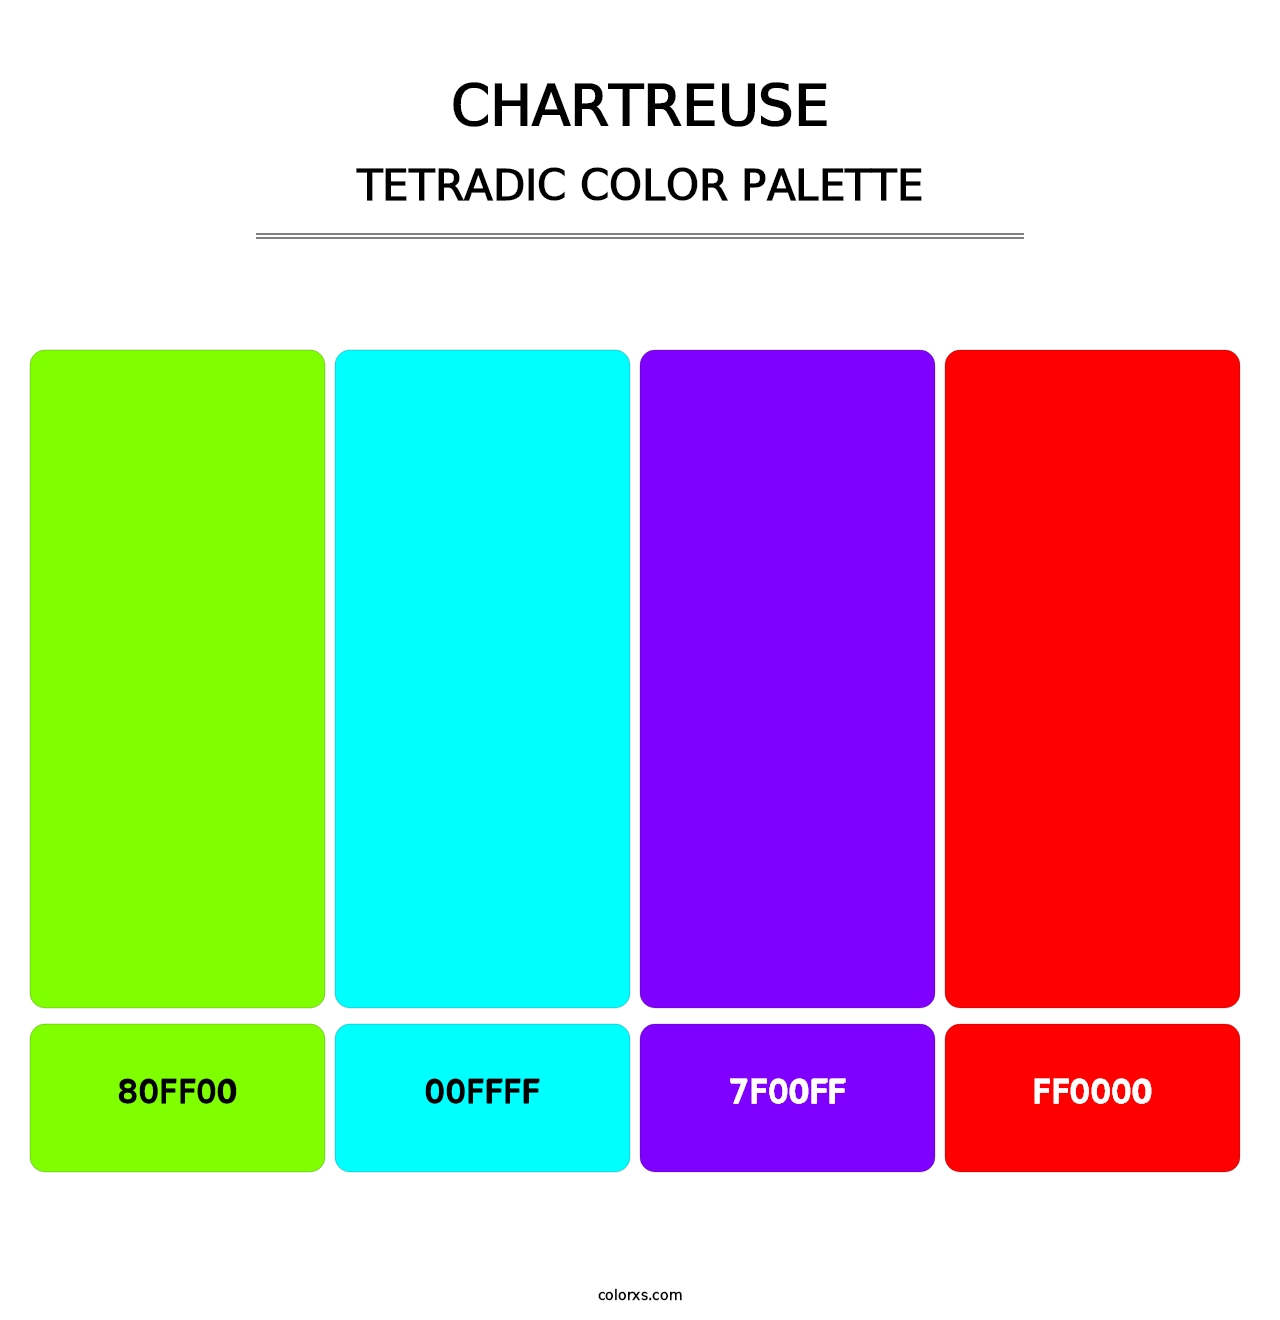 Chartreuse - Tetradic Color Palette